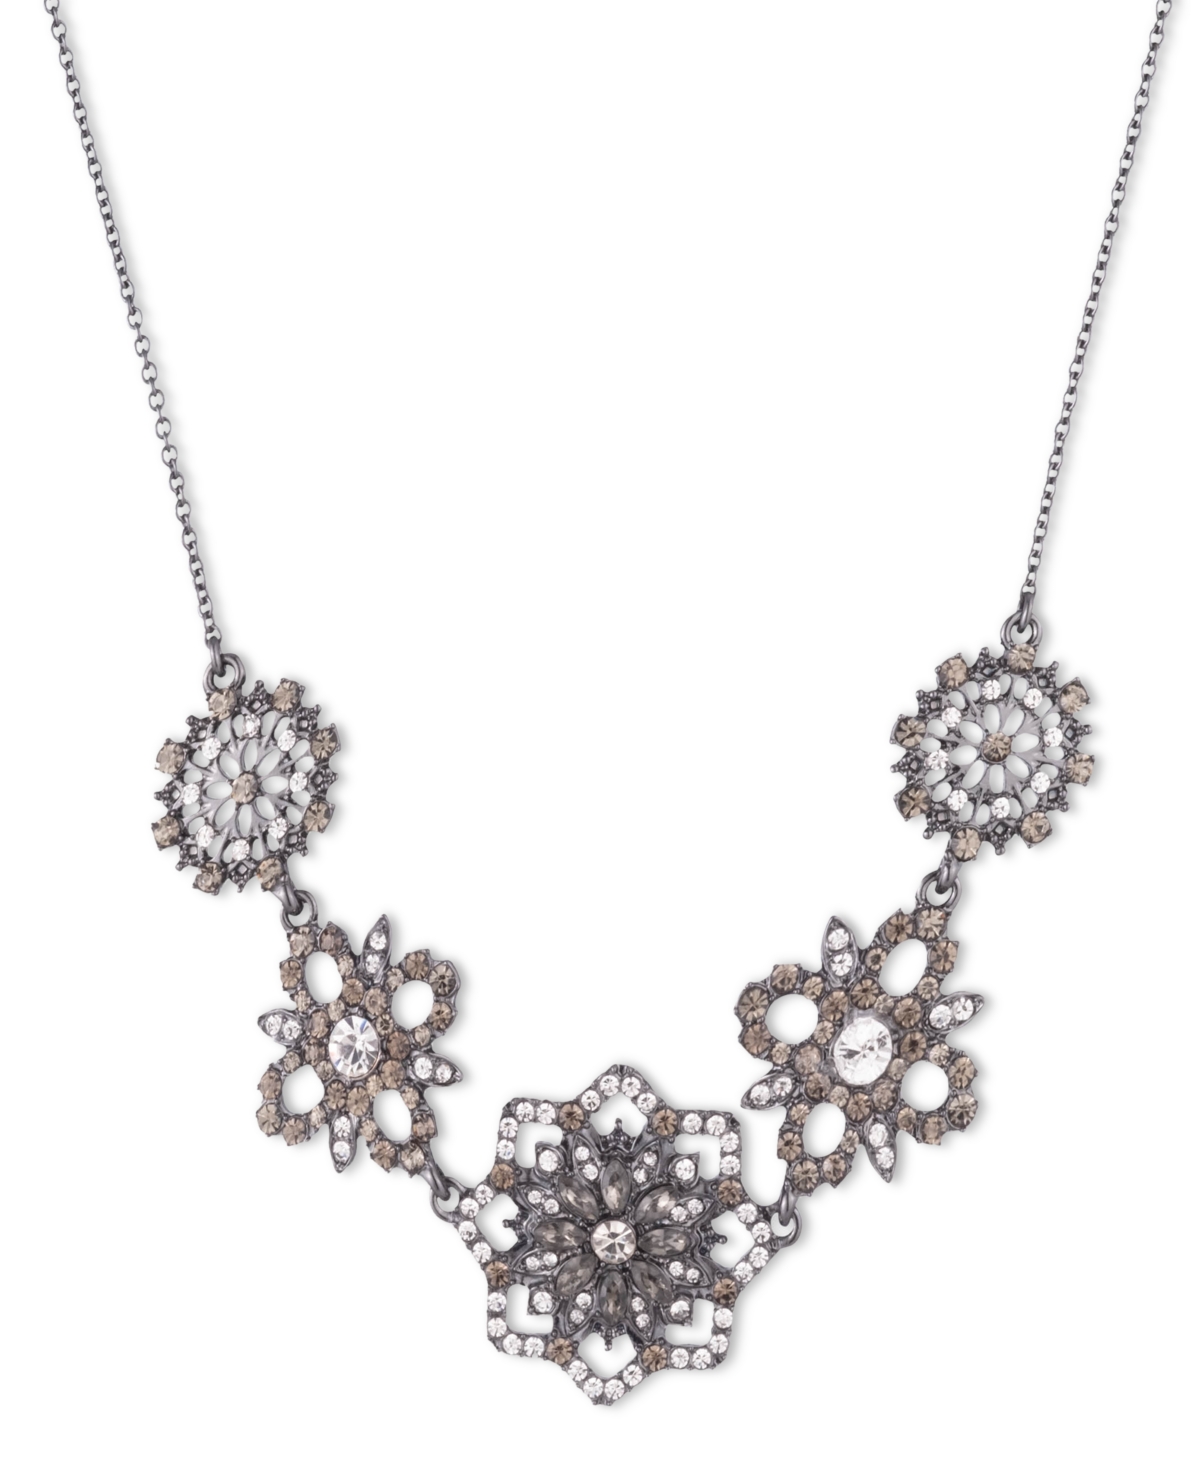 Marchesa Crystal Floral Frontal Necklace, 16" + 3" Extender In Dark Grey